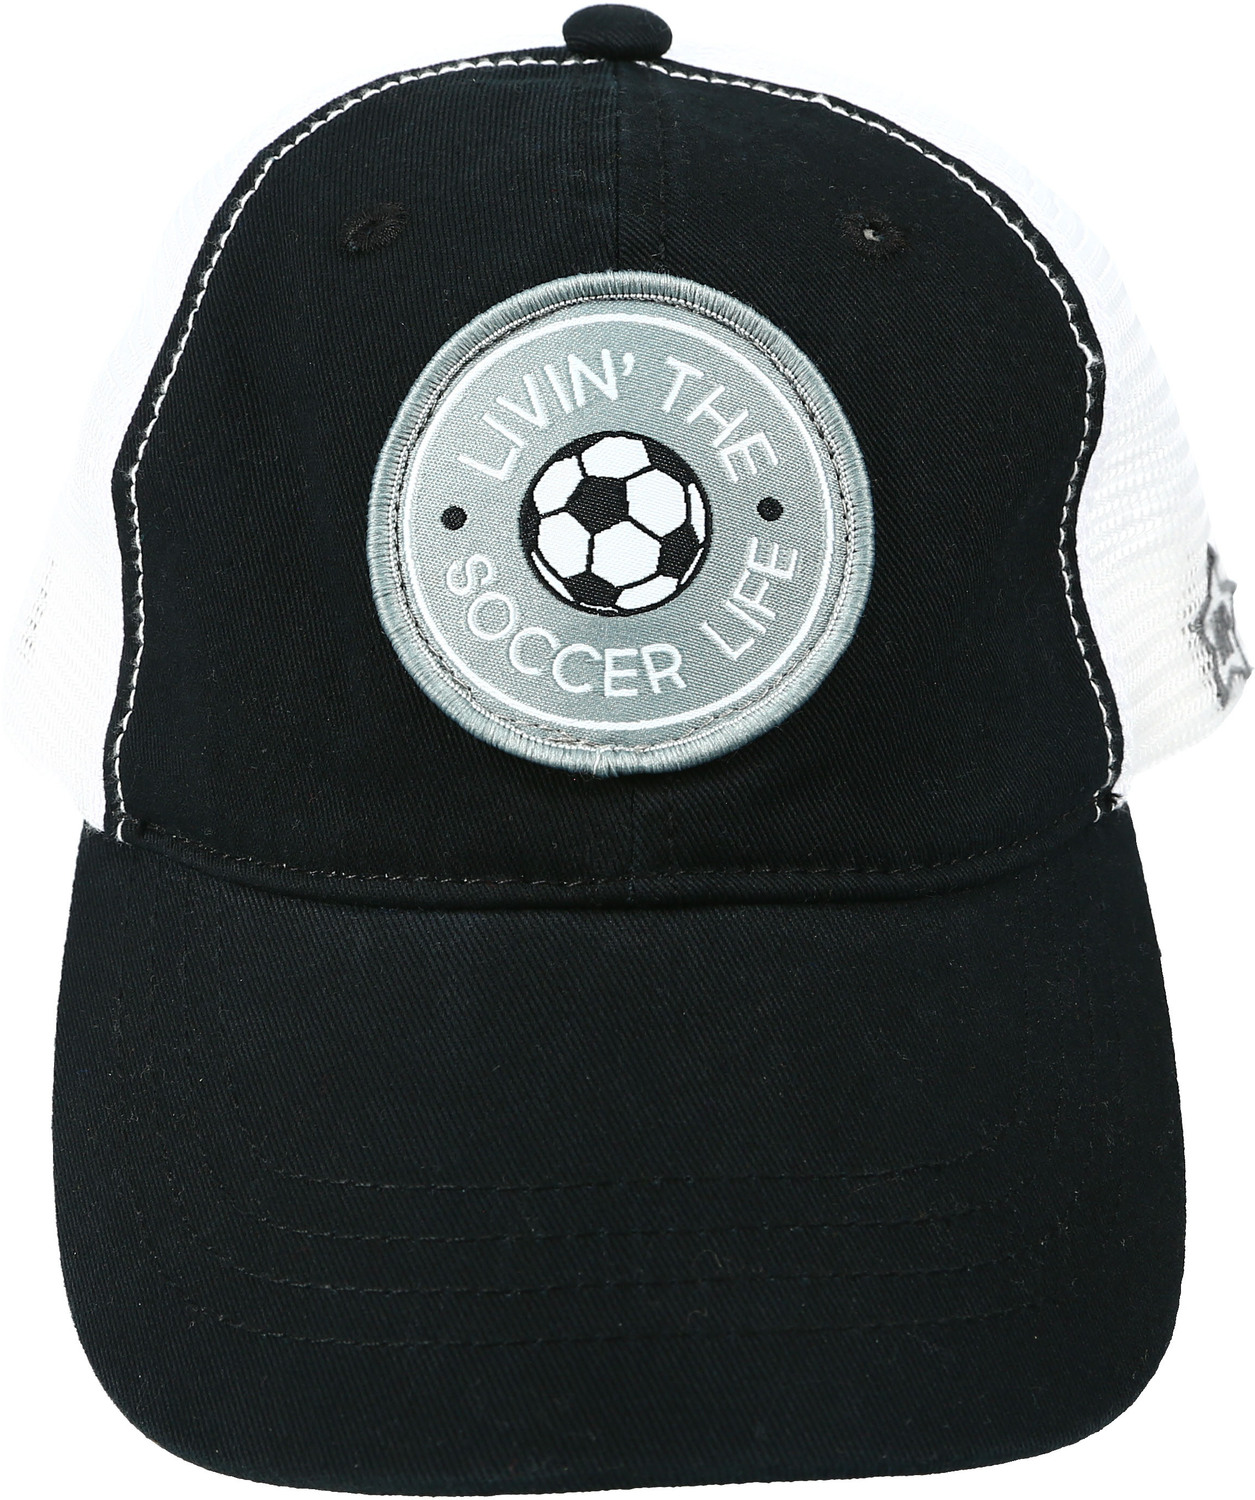 Soccer Life by We People - Soccer Life - Black Adjustable Mesh Hat